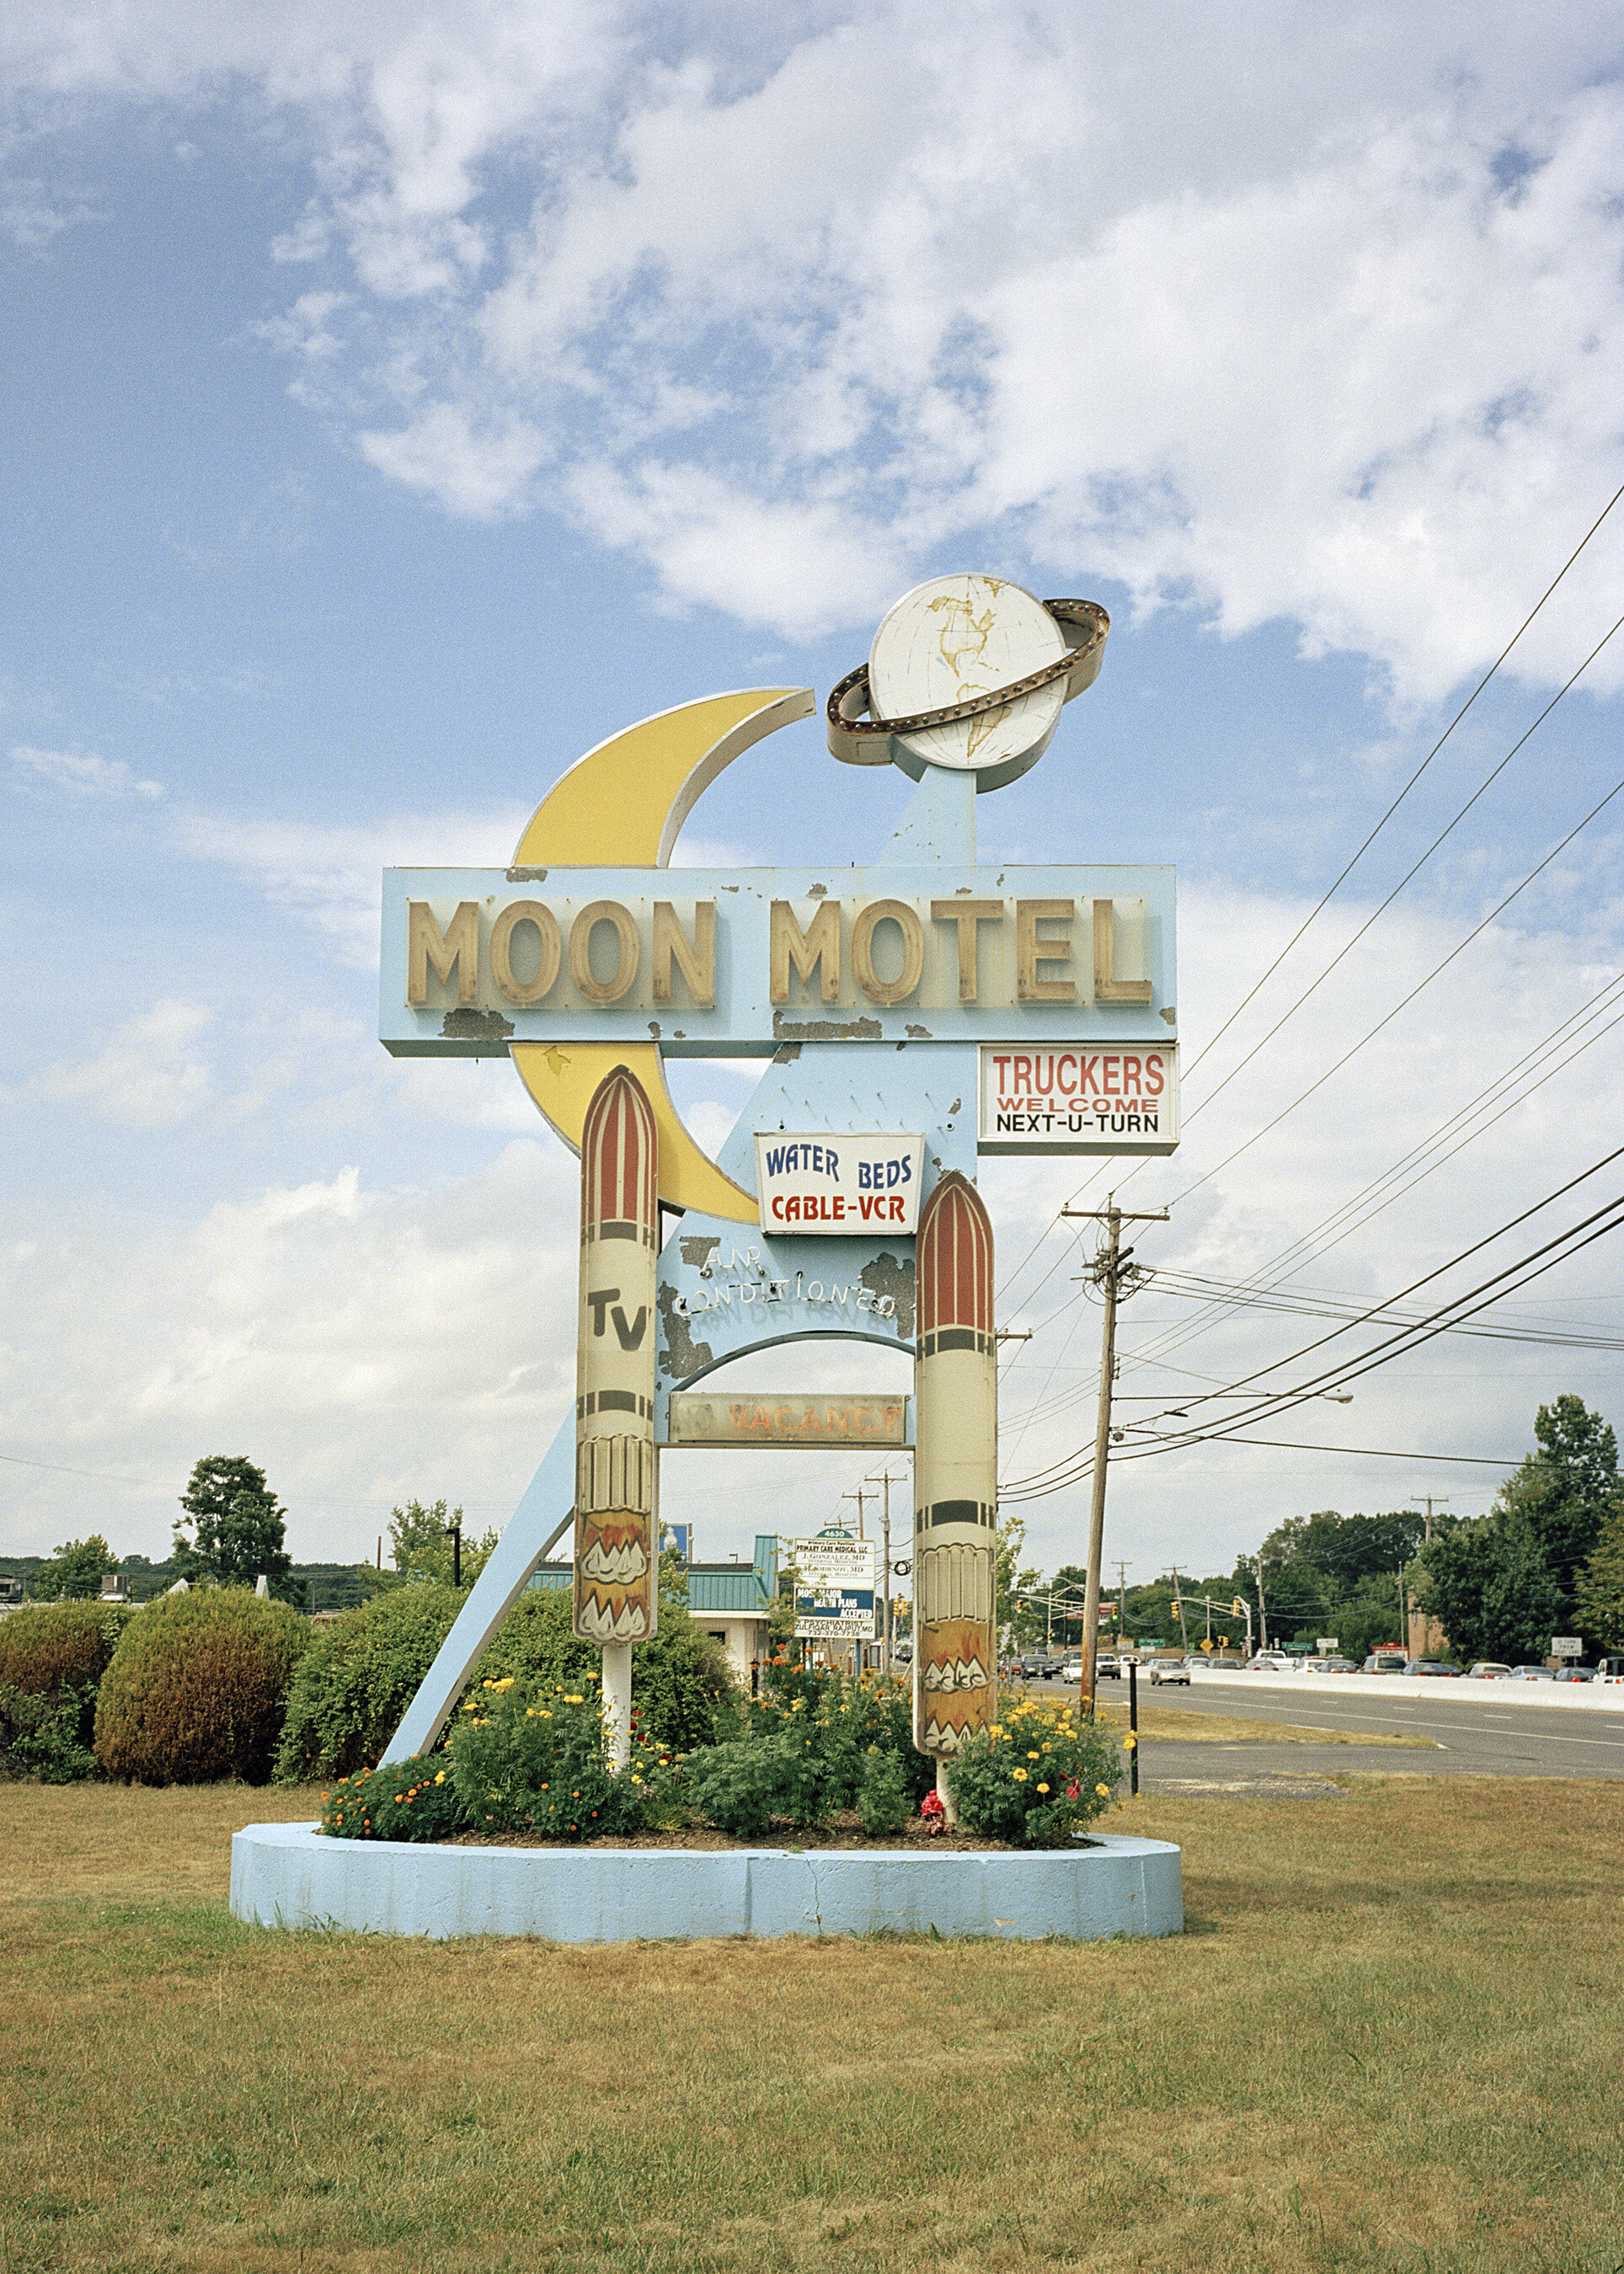 Moon Motel (now Demolished), Howell, NJ. 2006